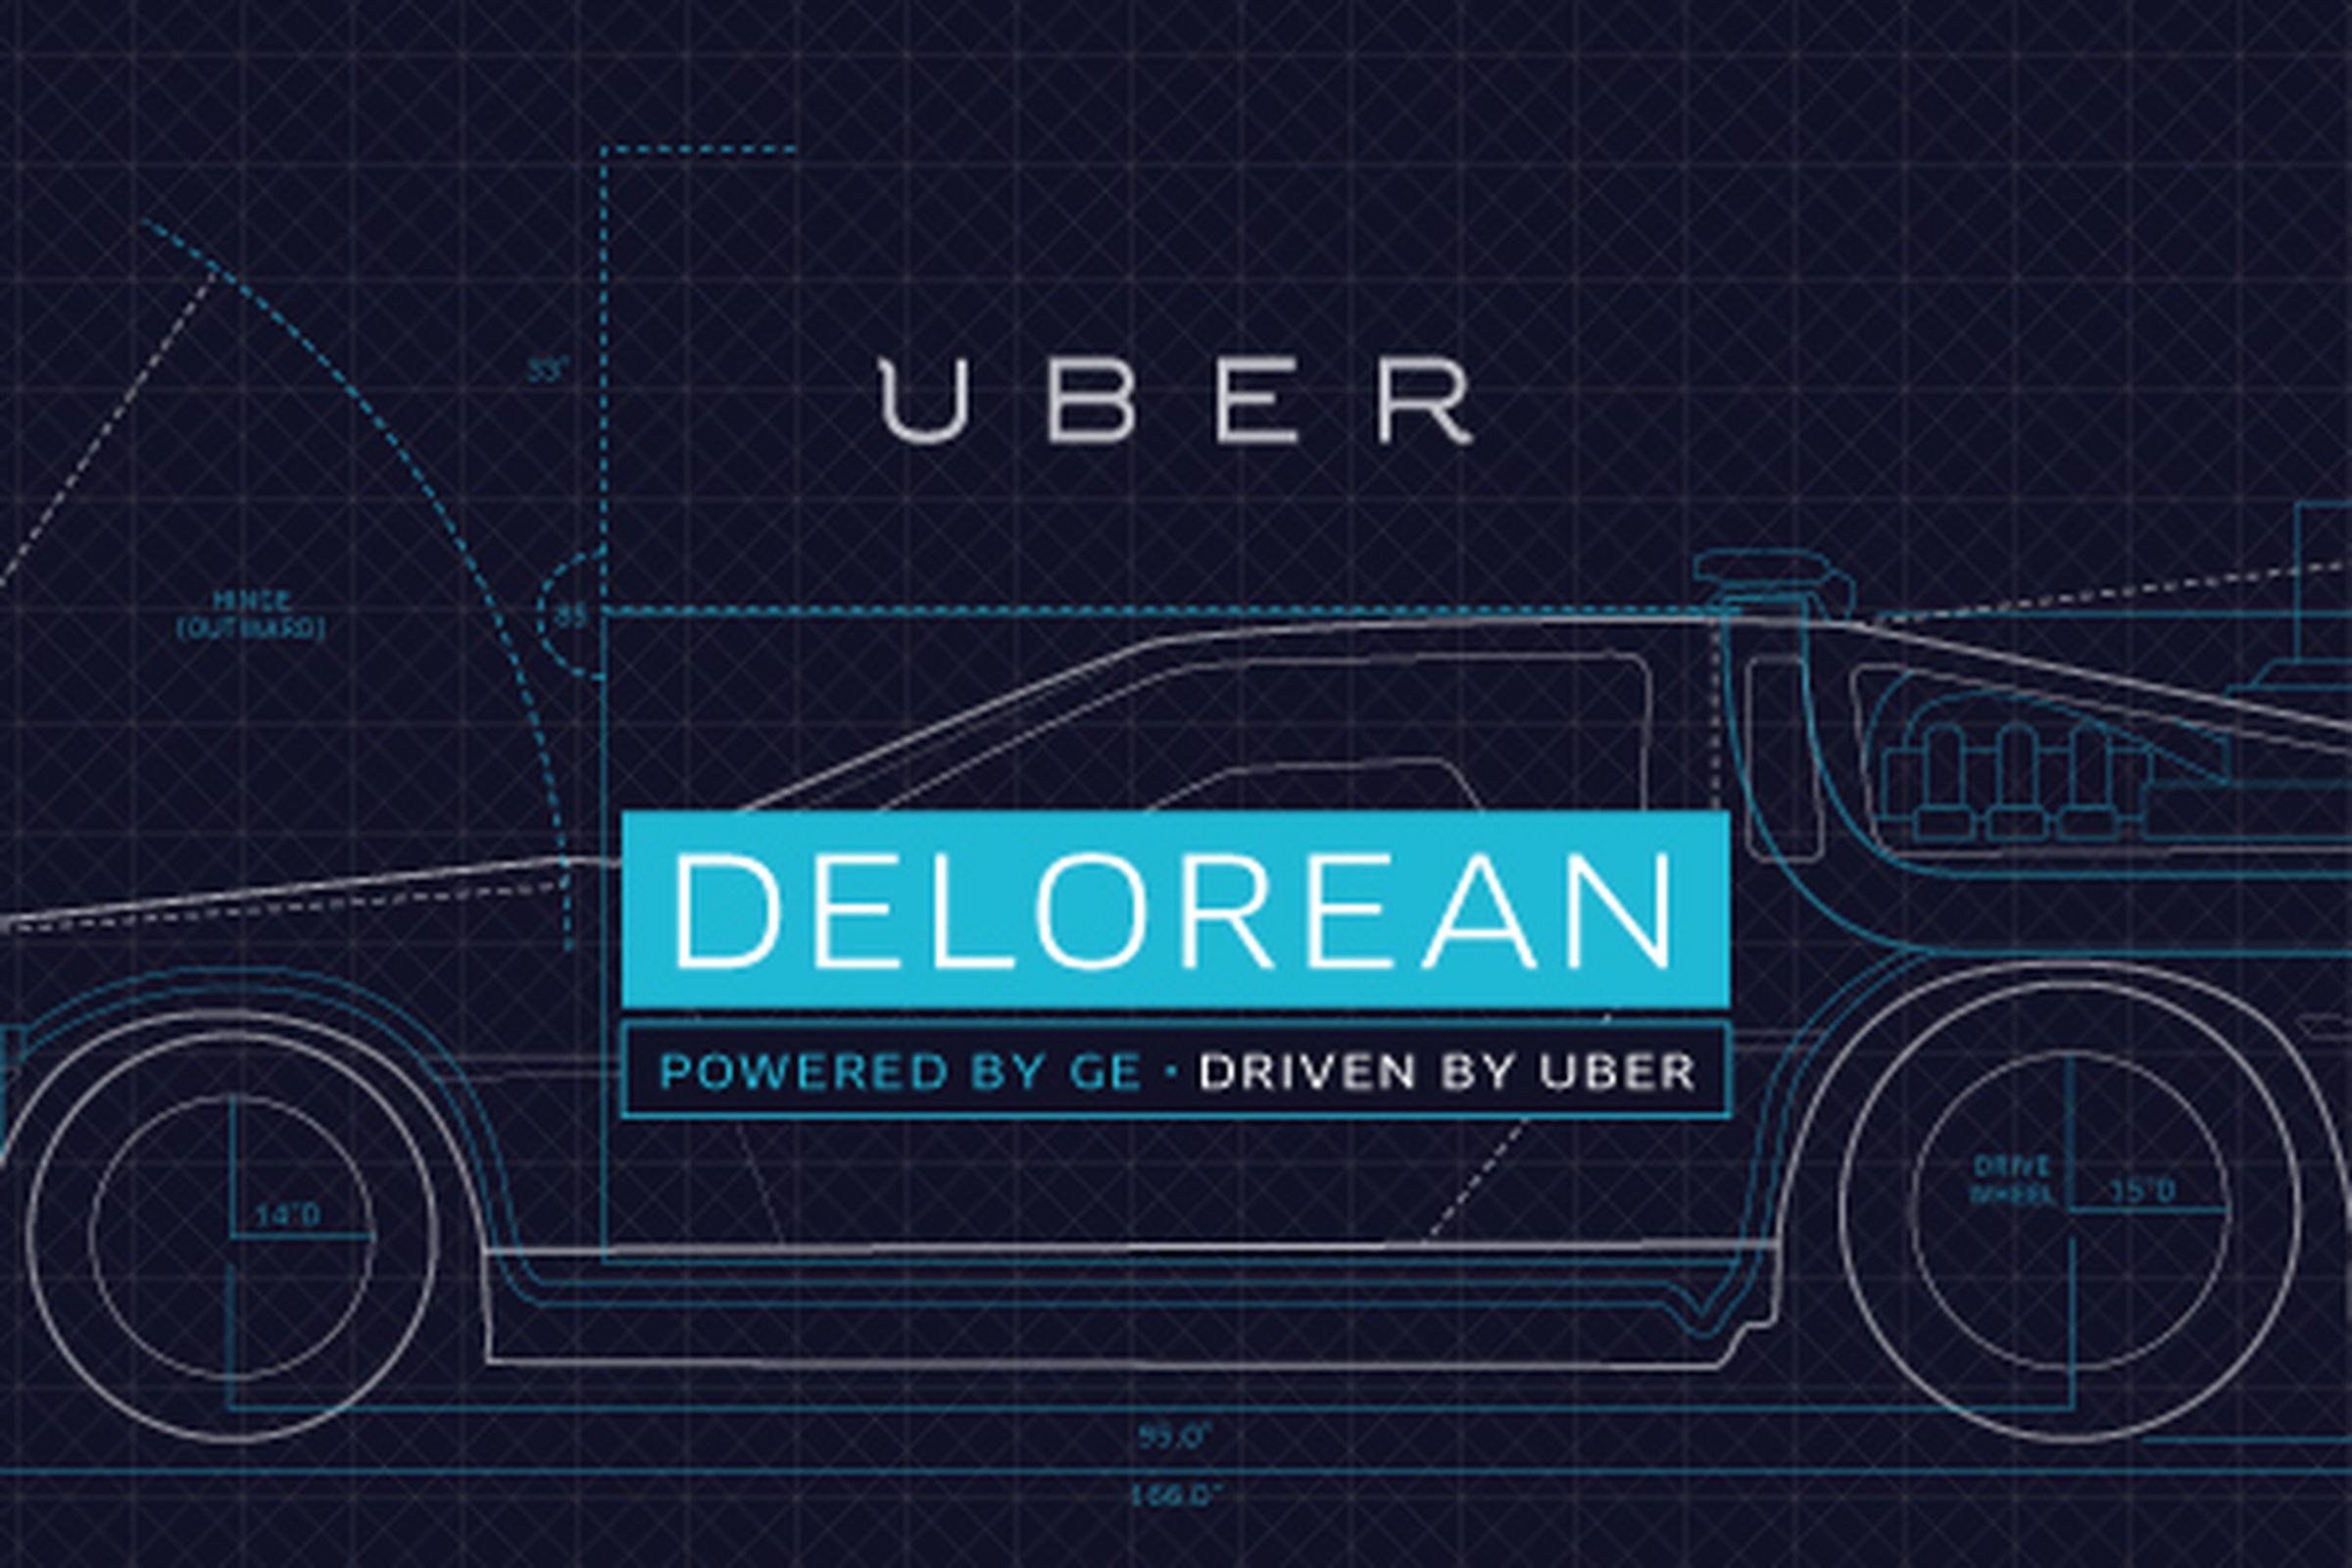 Uber DeLorean promotion